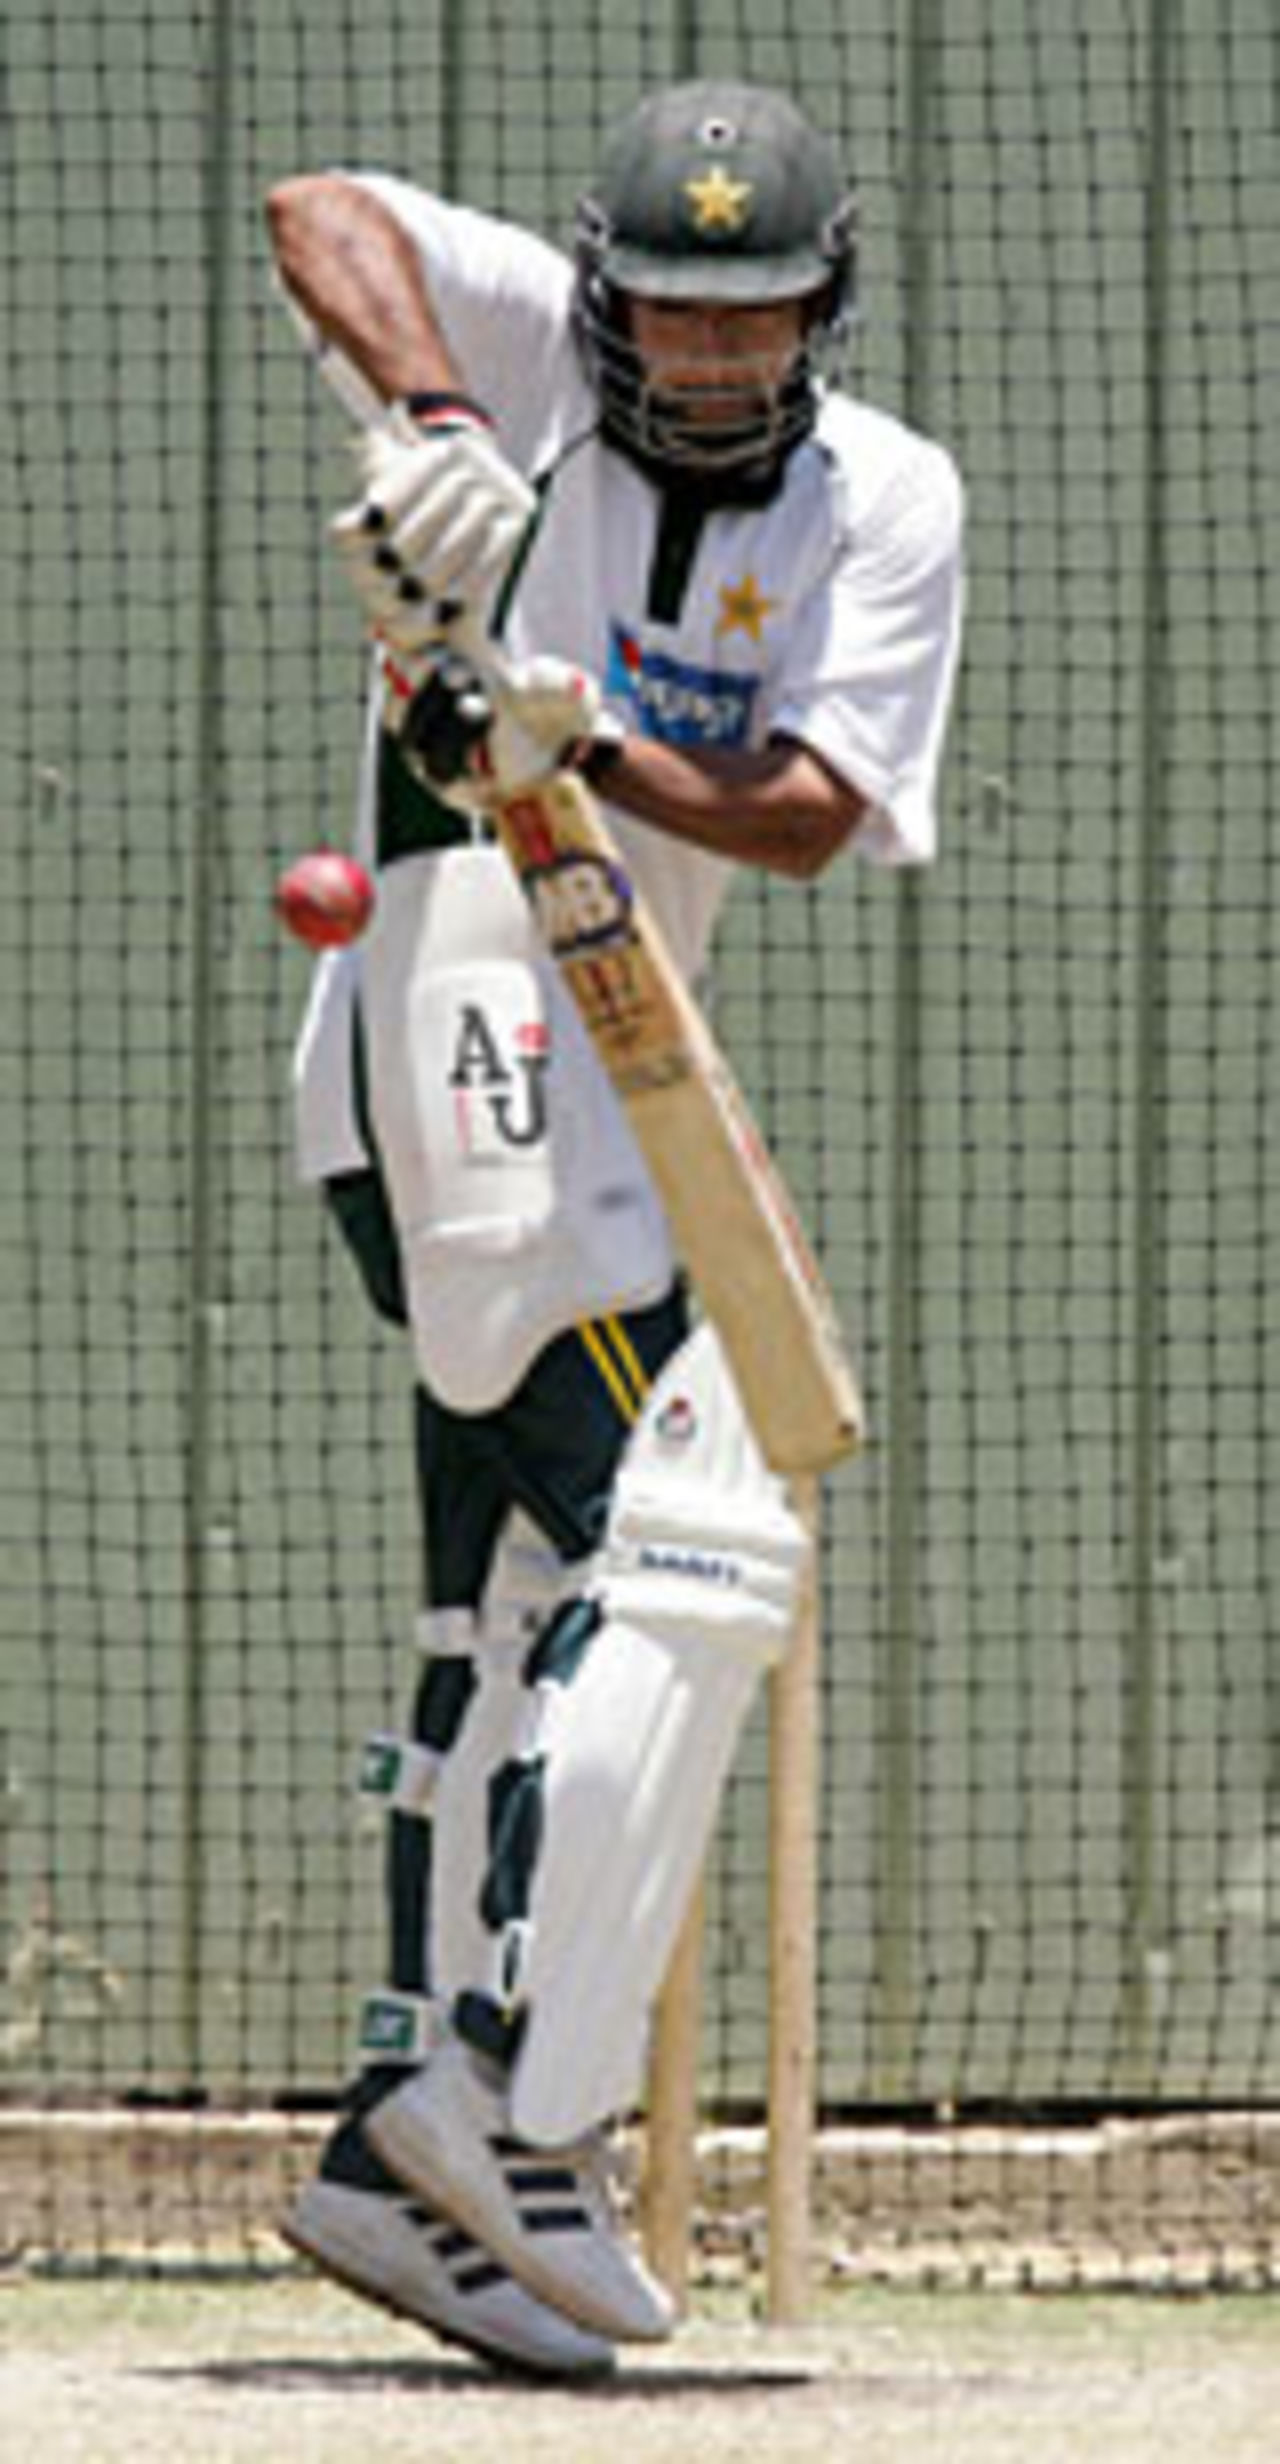 Asim Kamal batting in the nets at Perth, December 15 2004